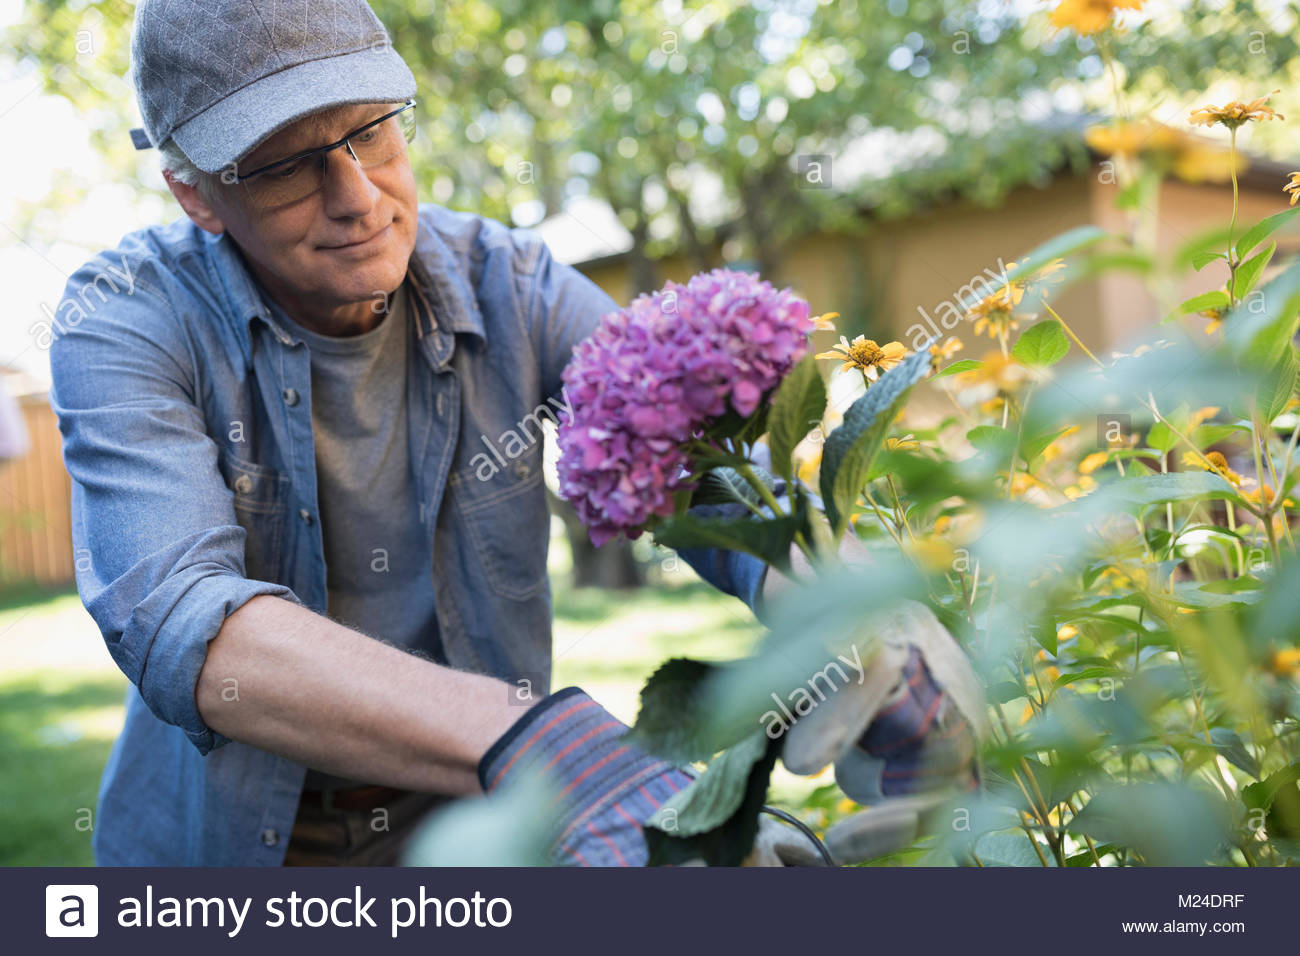 Senior man gardening, picking flowers in backyard garden Stock Photo